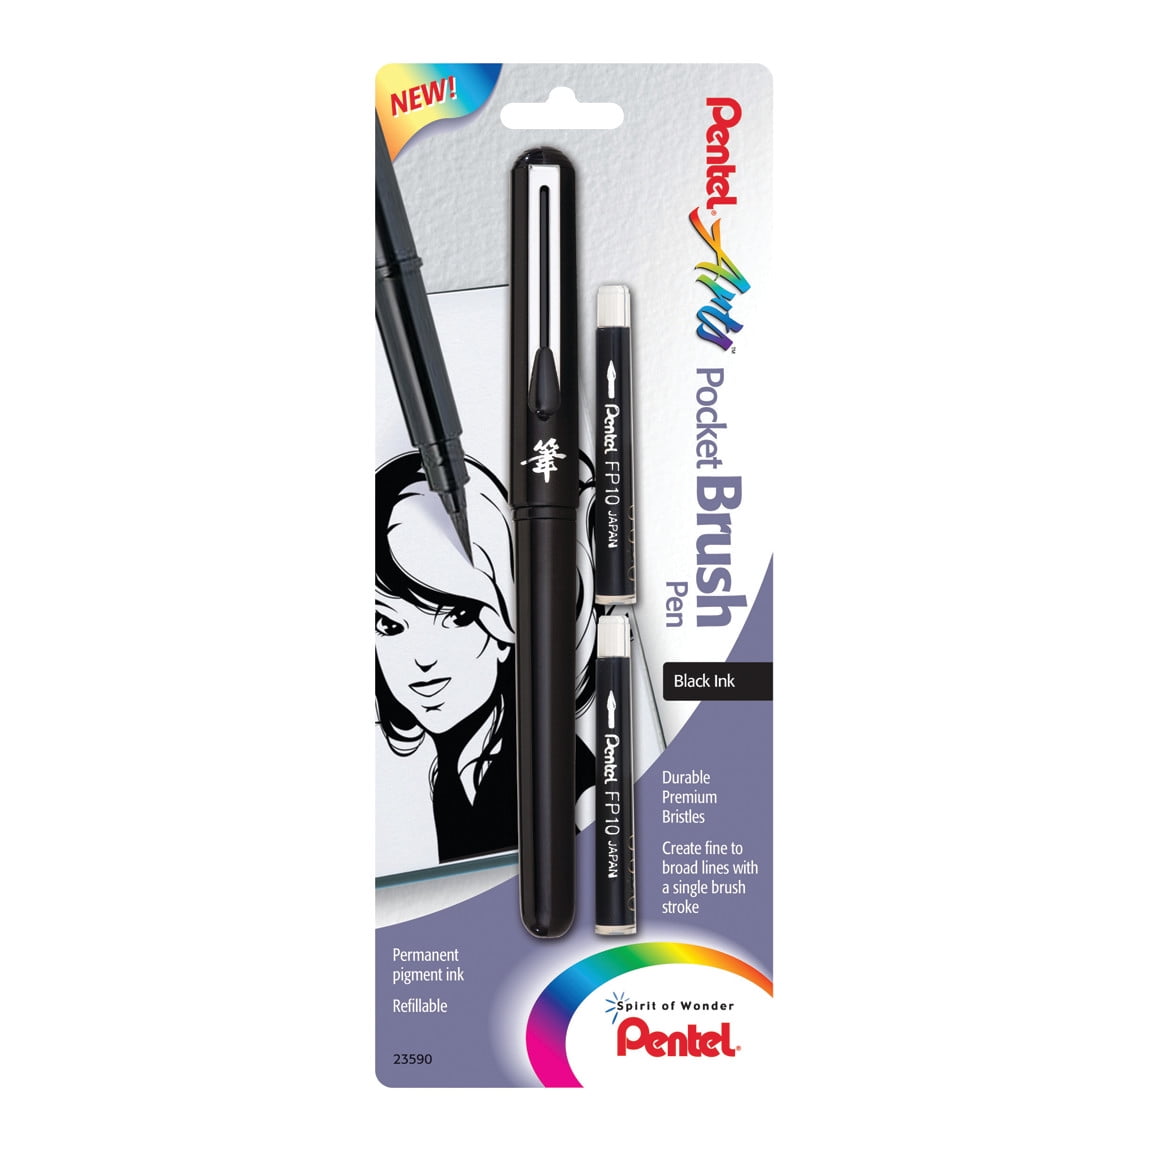 Pentel Pocket Chinese Black Ink Brush Pen 2 Refills FP10 - Orange Barrel 